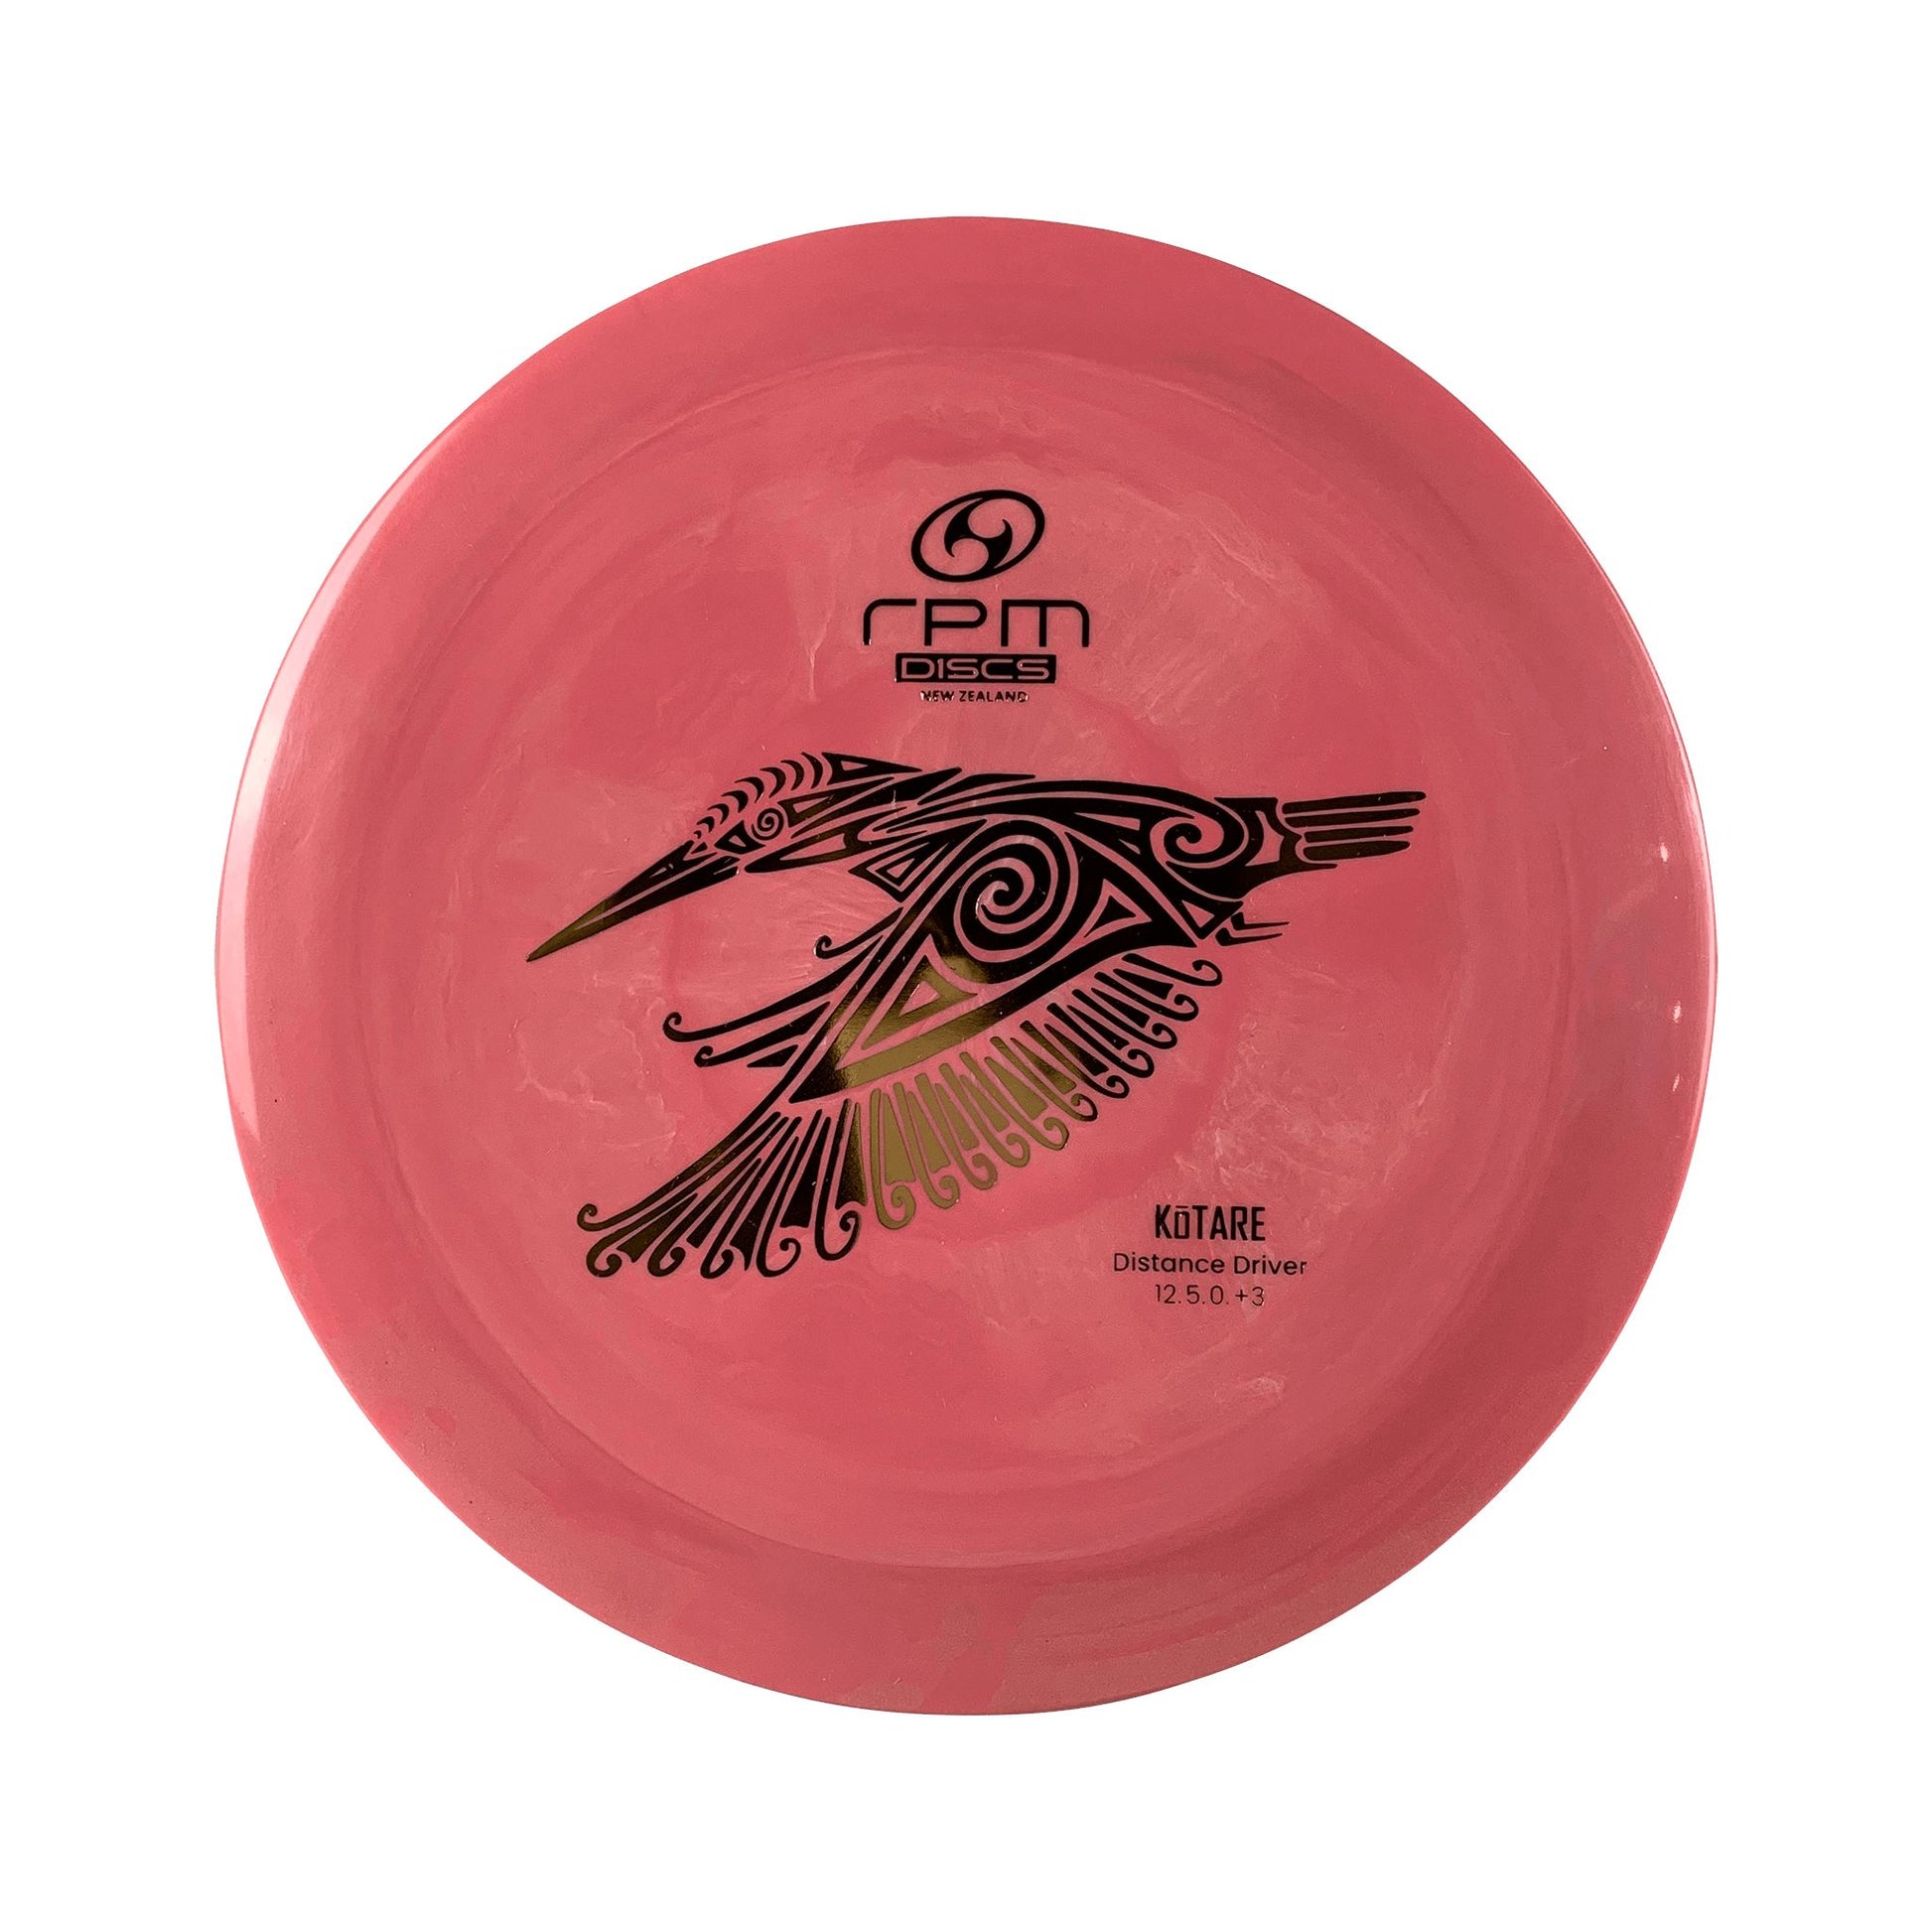 Atomic Kotare Disc RPM Discs pink 171 